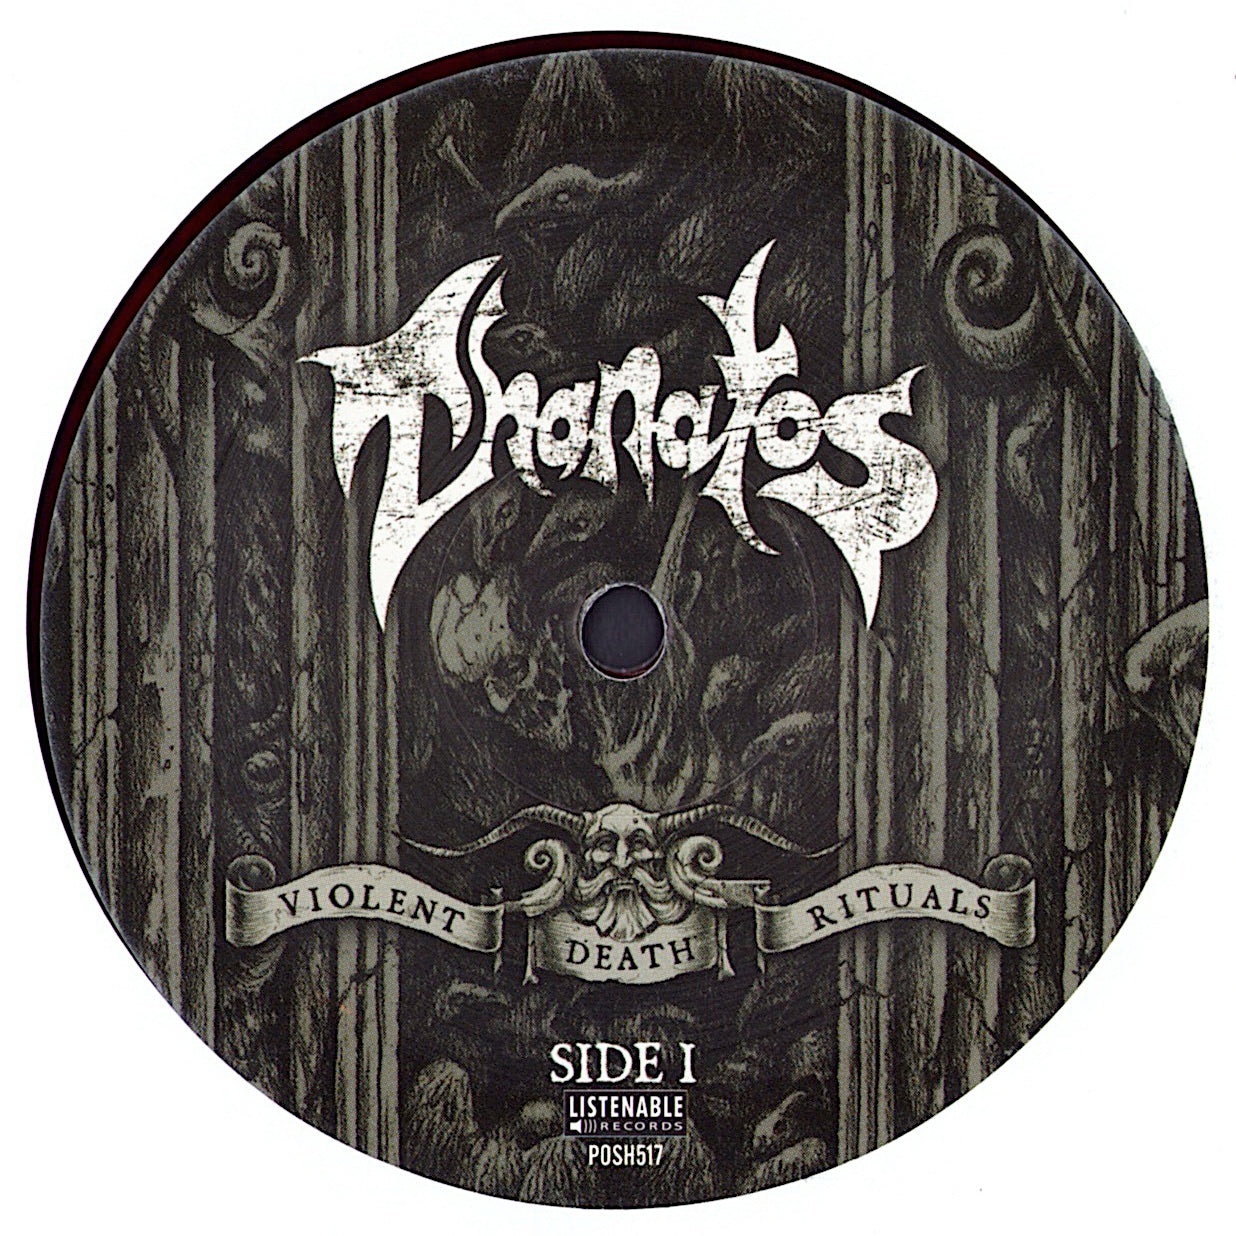 Thanatos - Violent Death Rituals Red Black Marbled Vinyl LP Limited Edition